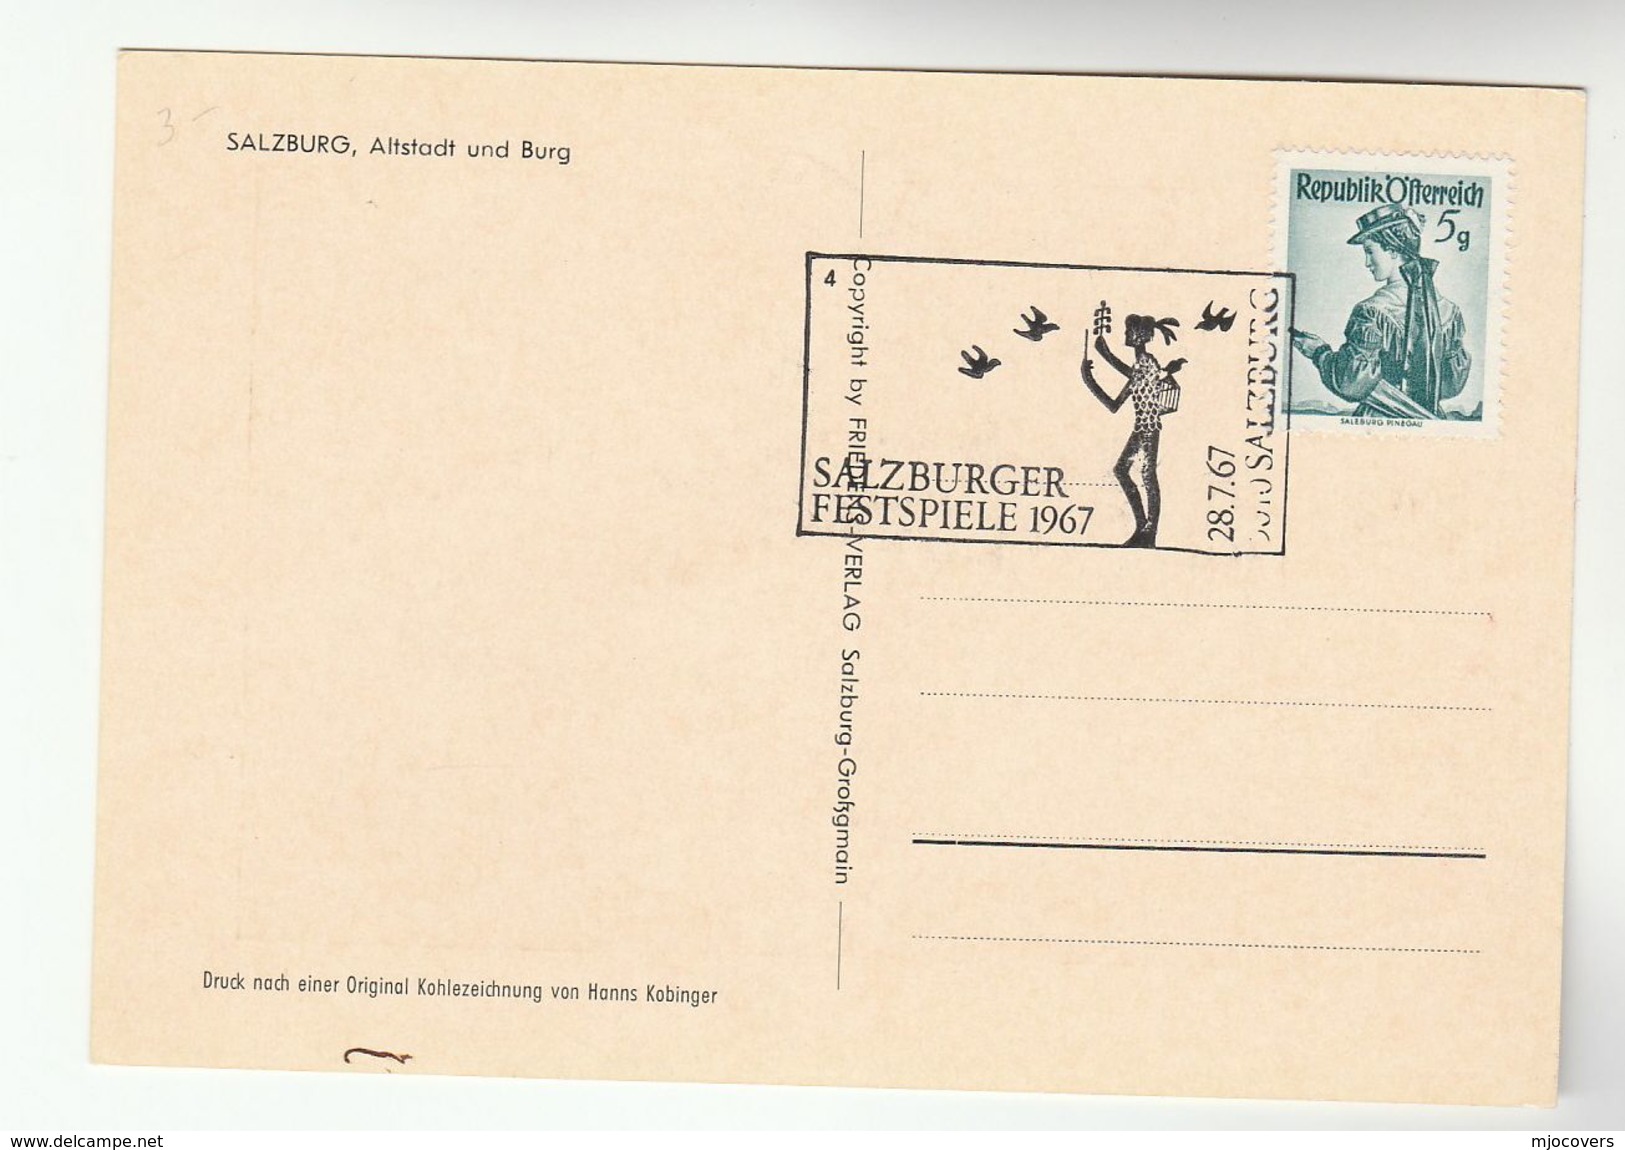 1967 SALZBURG FESTIVAL EVENT Cover Card Stamps Postcard Bird Music Theatre Austria - Music